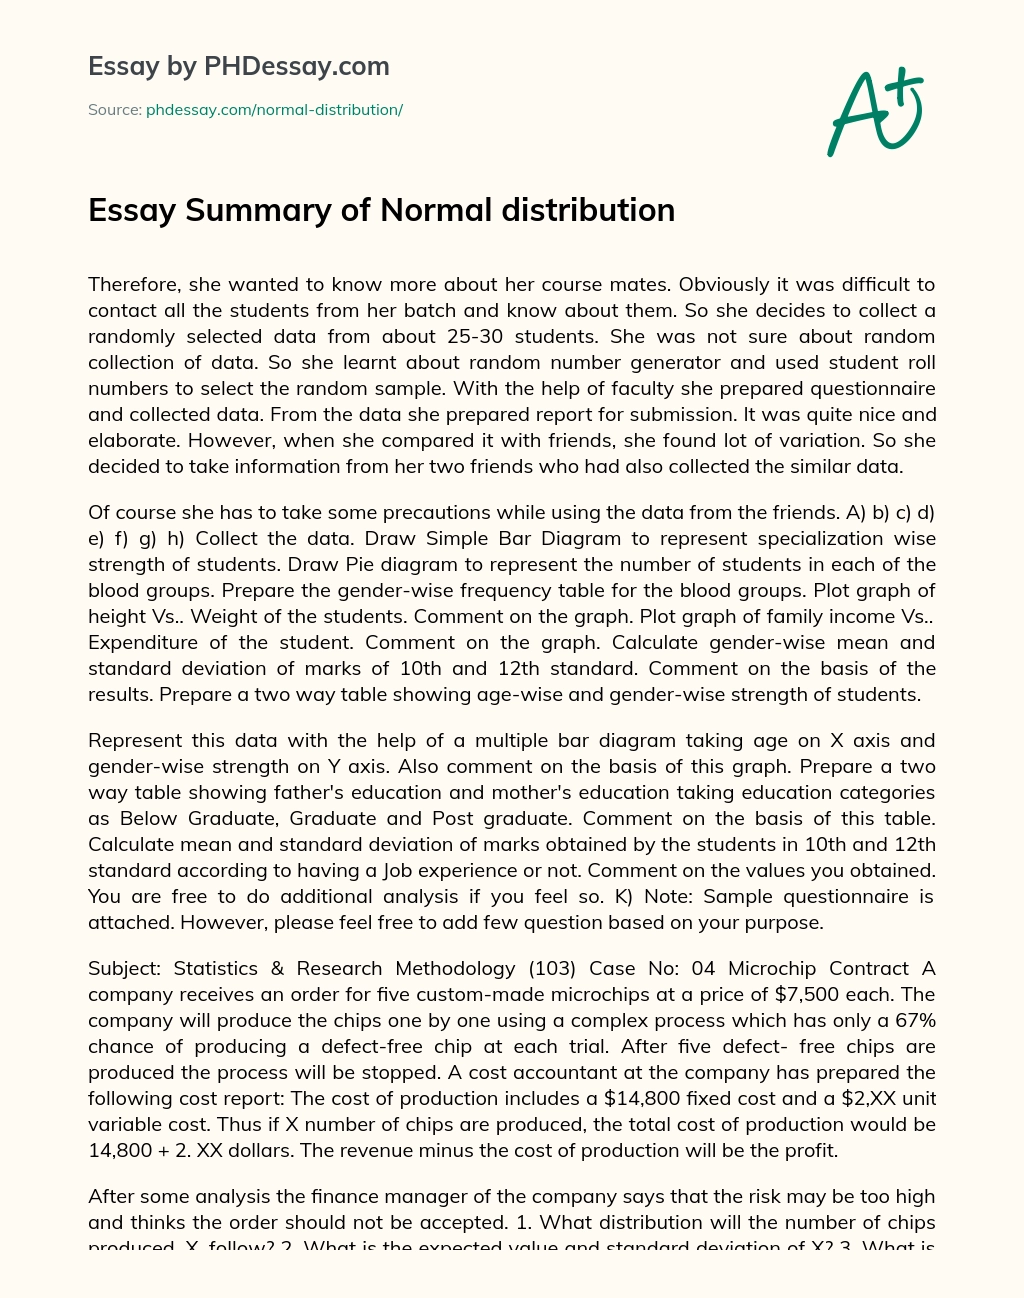 Essay Summary of Normal distribution essay